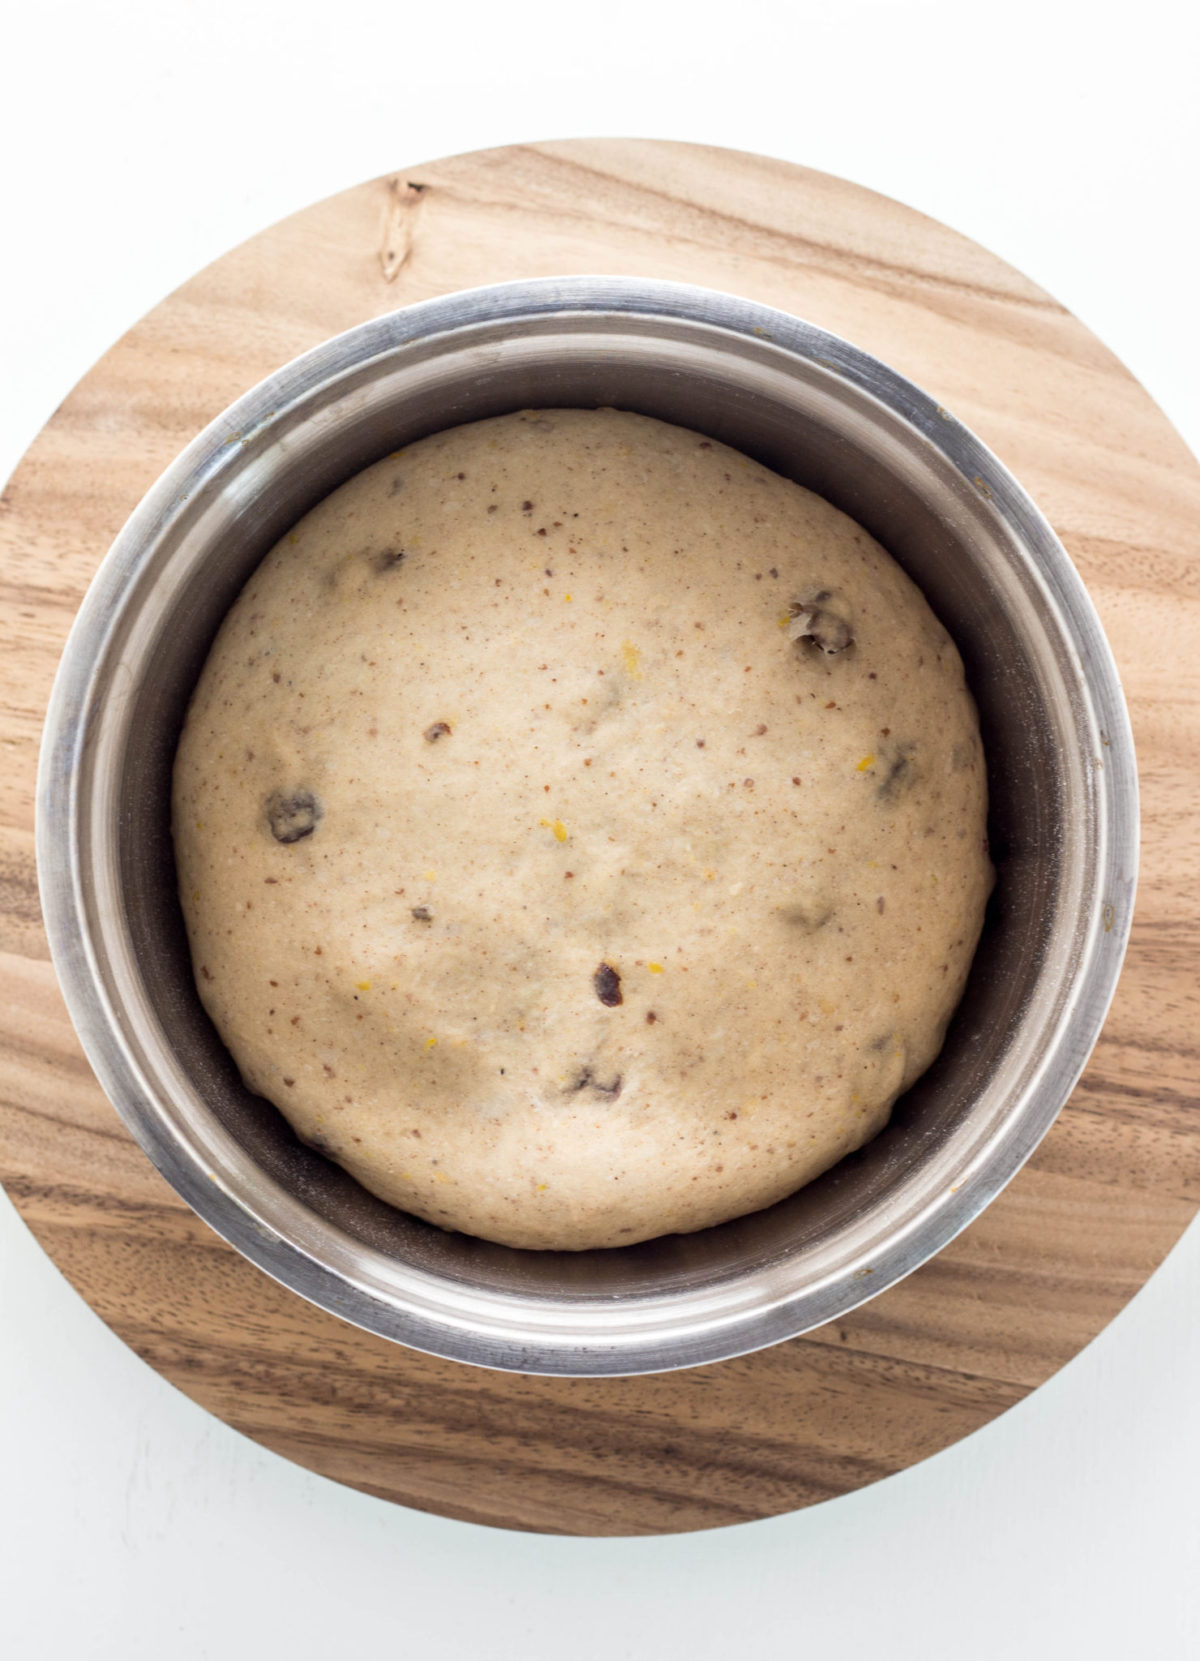 Top view of dough in a metal bowl. 